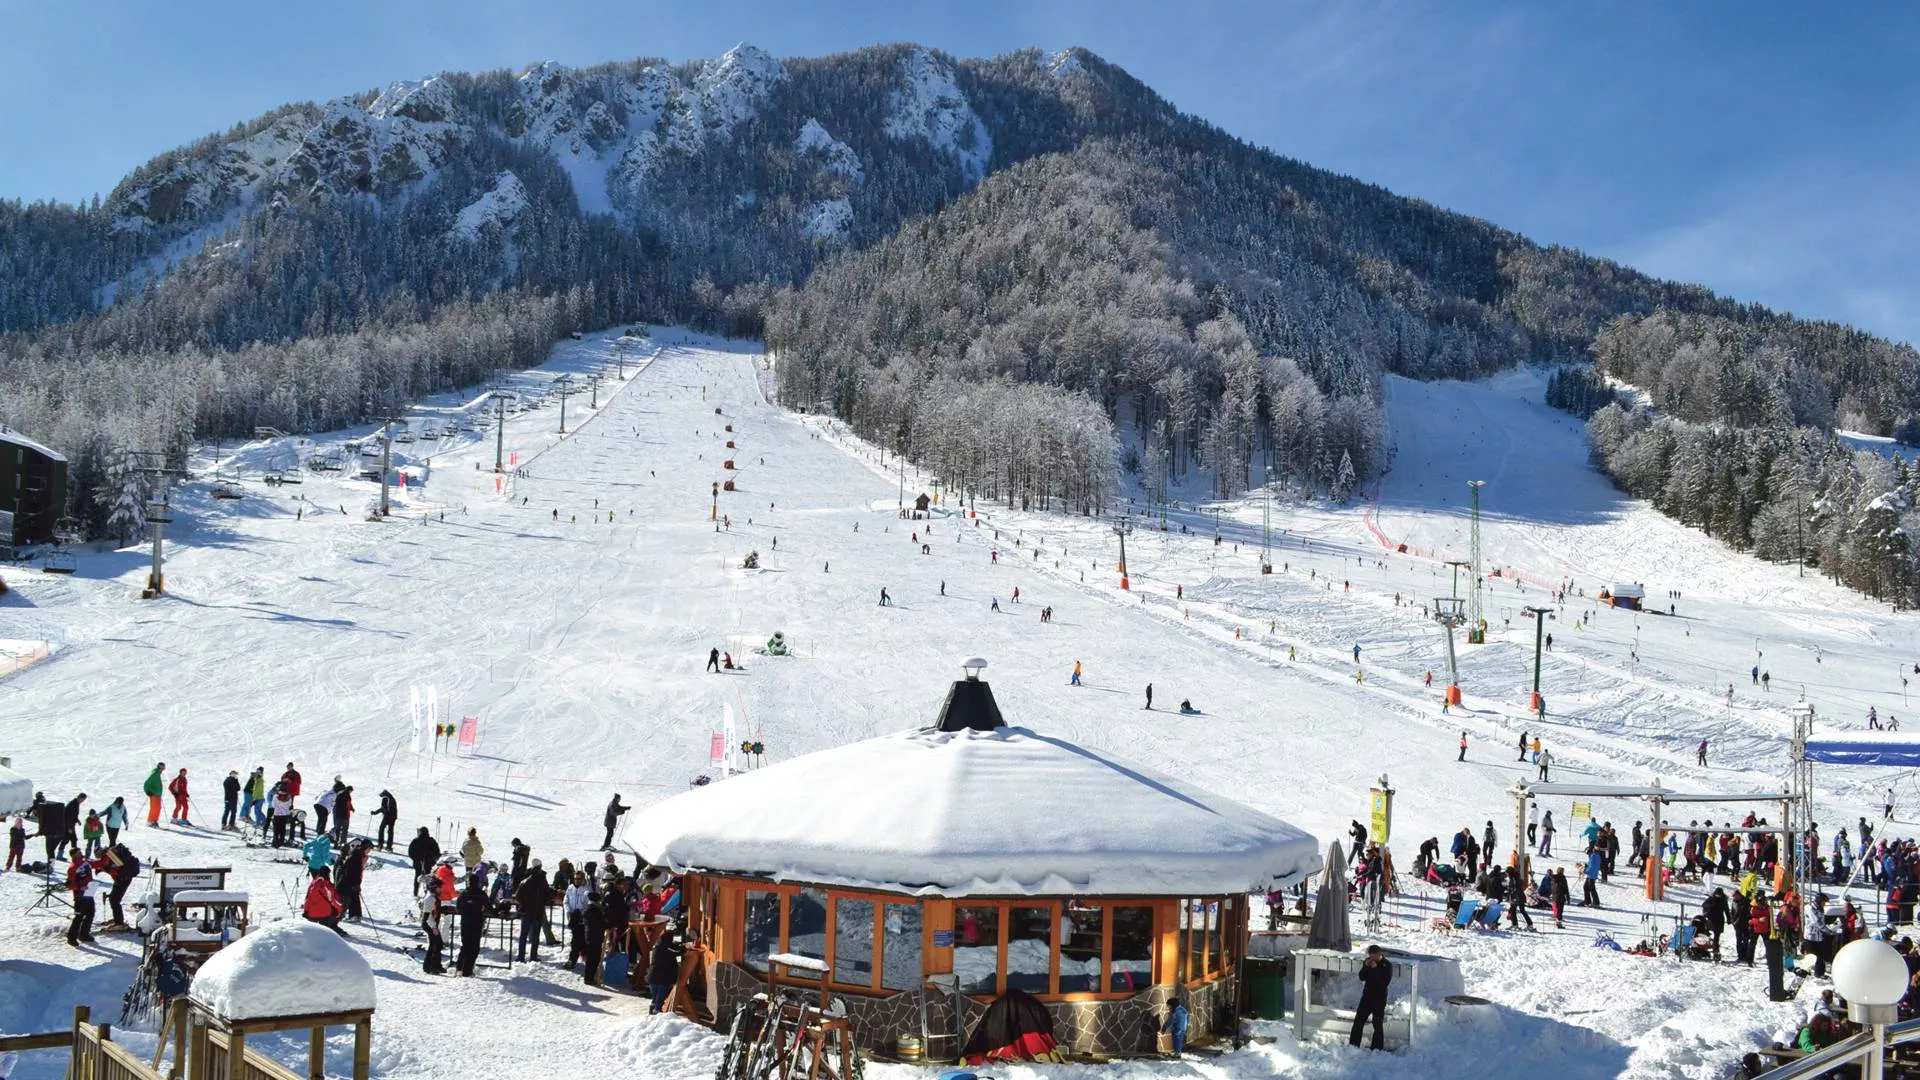 Kranjska Gora in Slovenia, Europe | Snowboarding,Skating,Snowmobiling - Rated 5.2